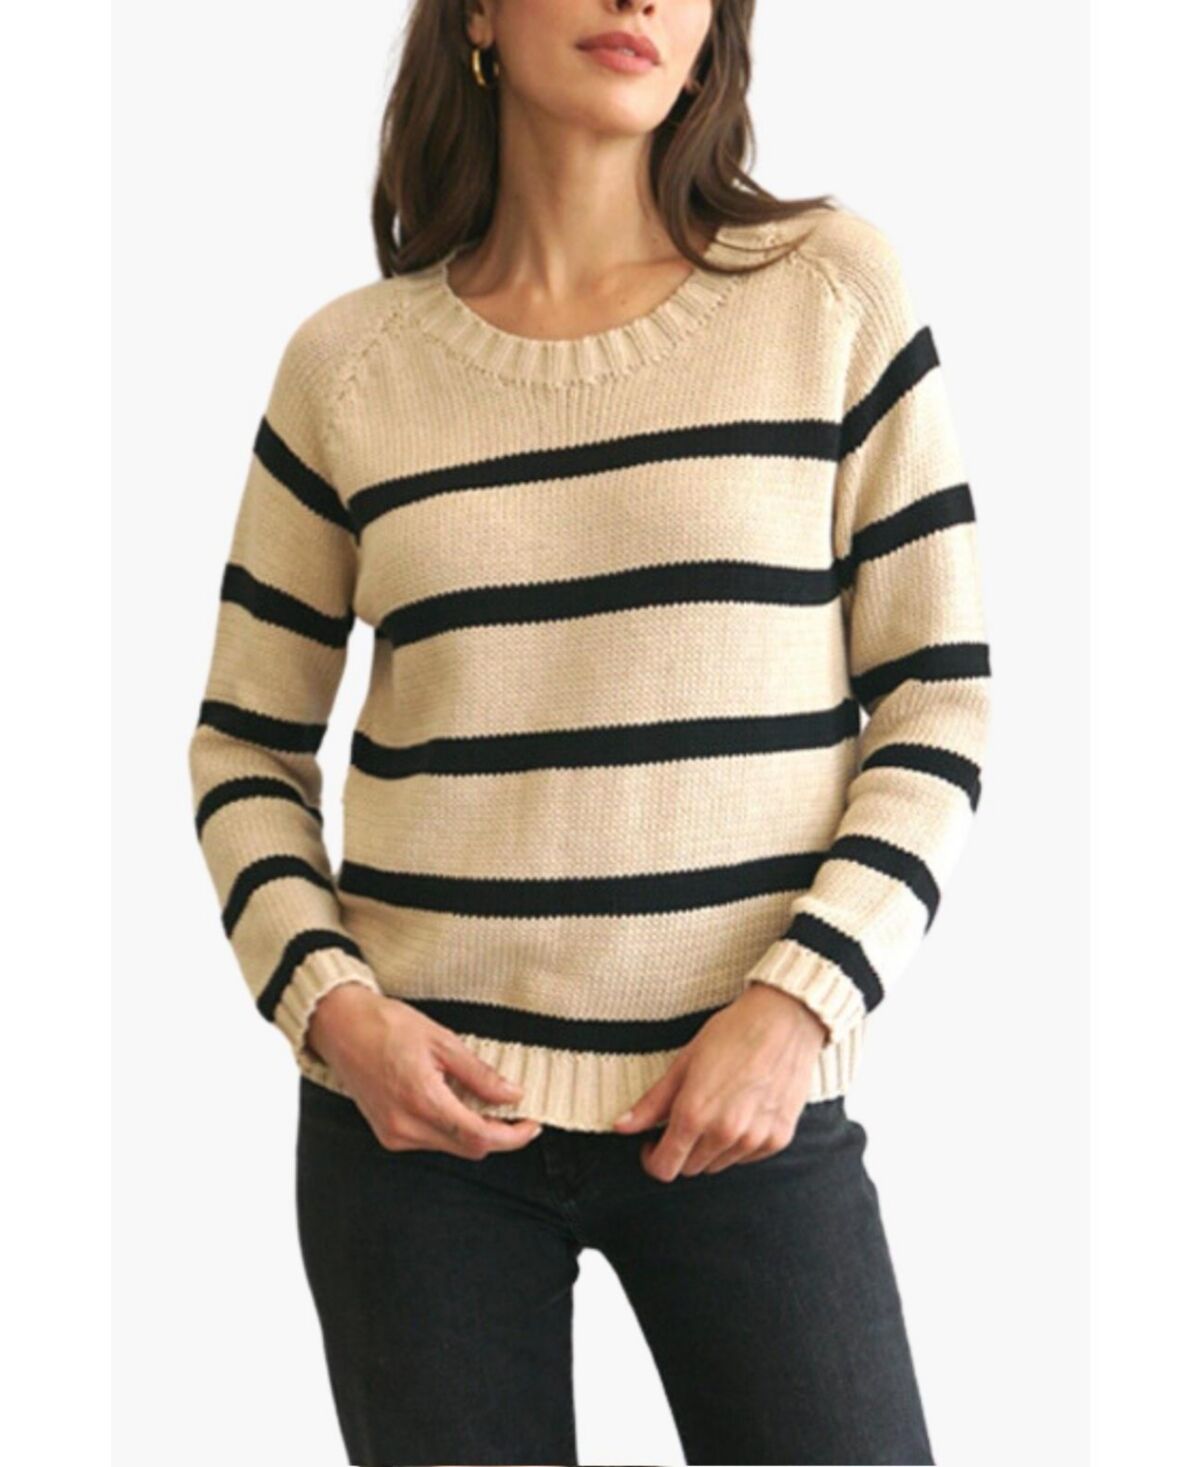 Paneros Clothing Women's Cotton Sloane Crewneck Pullover Sweater - Sand/ black stripe